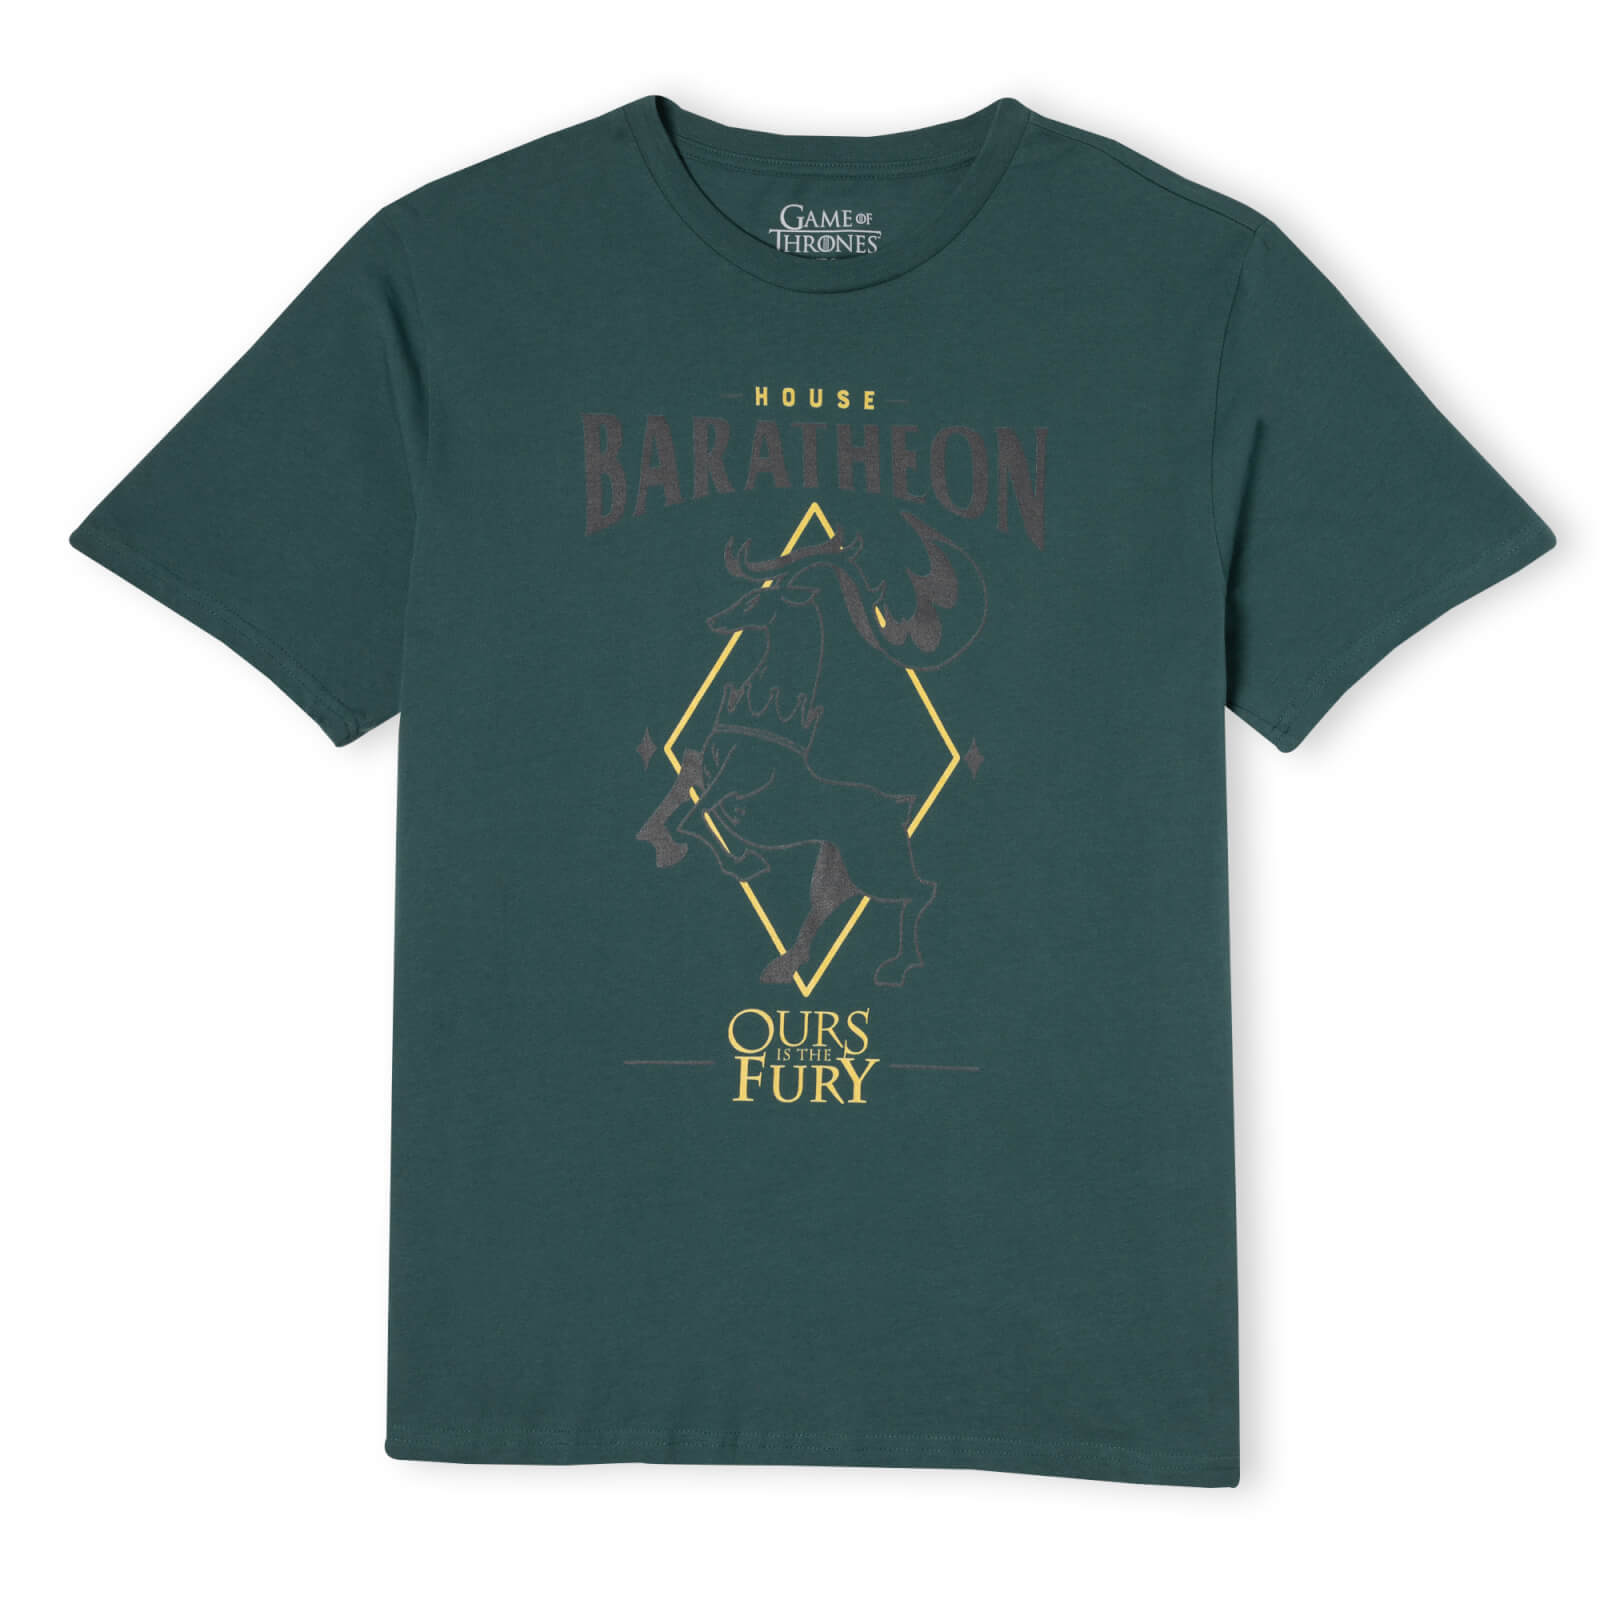 Game of Thrones House Baratheon Men's T-Shirt - Green - XXL - Green product